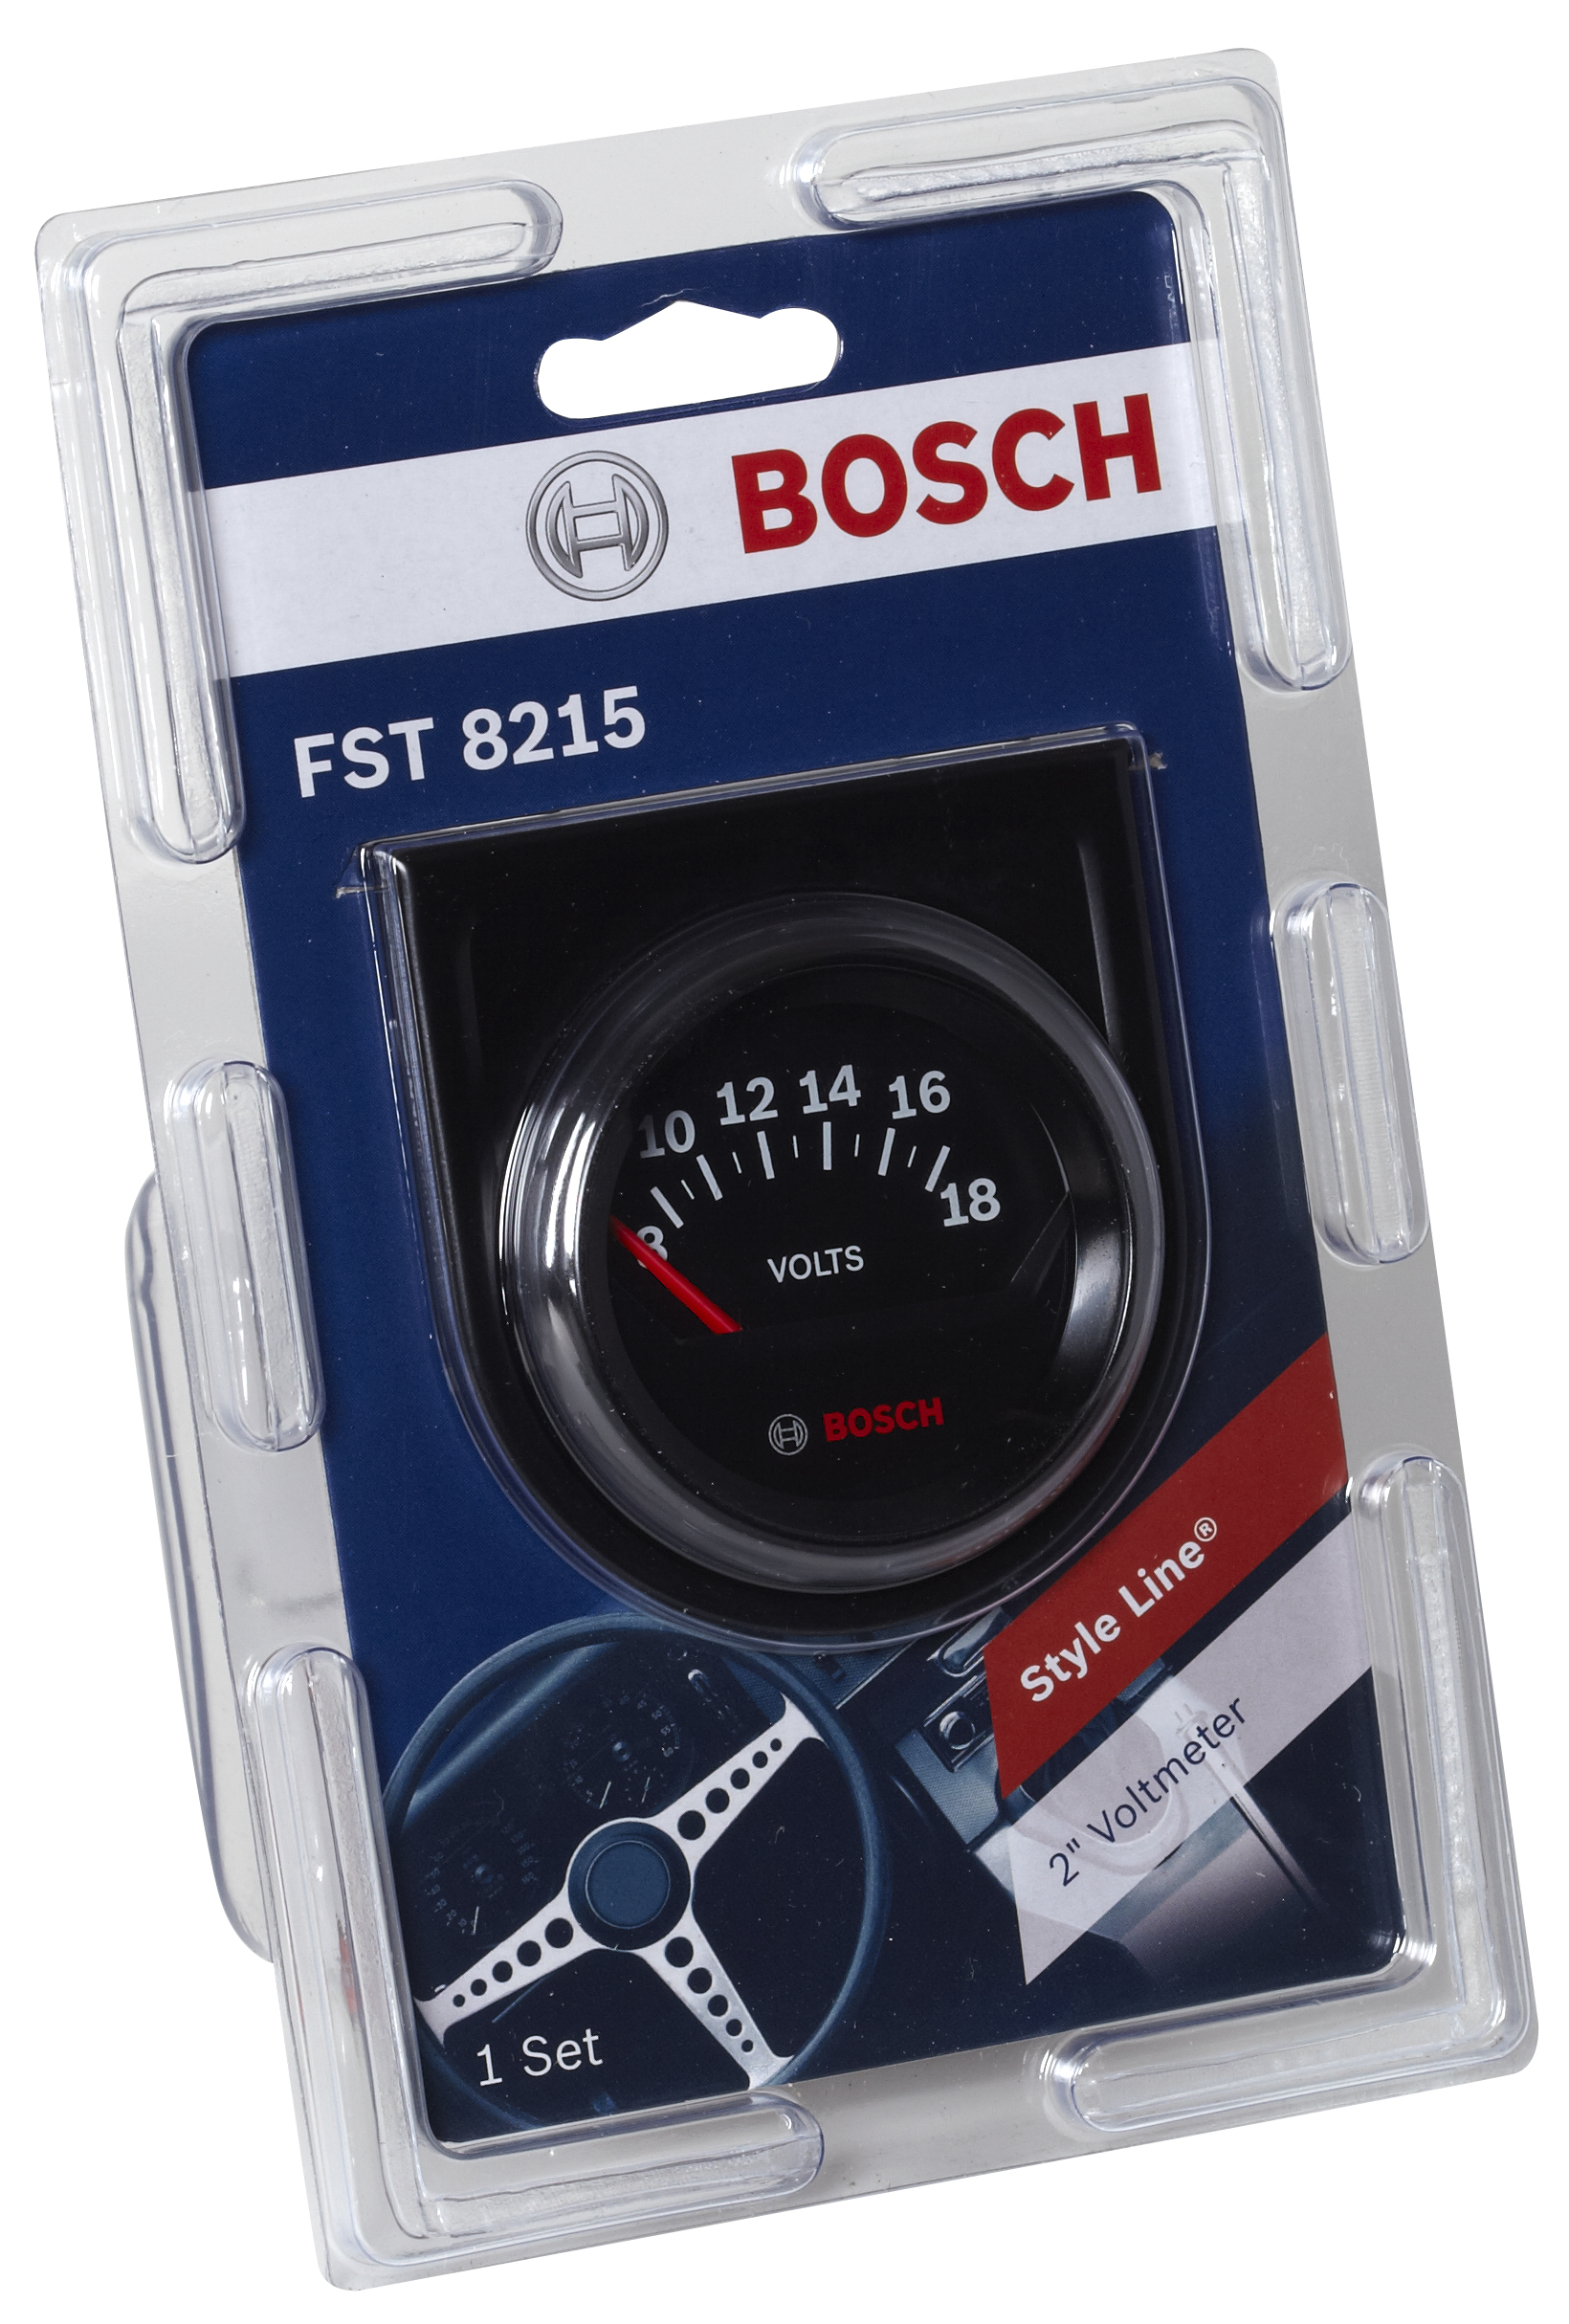 Bosch BL2215 Foret à métal 1-3/8 x 4 x 6